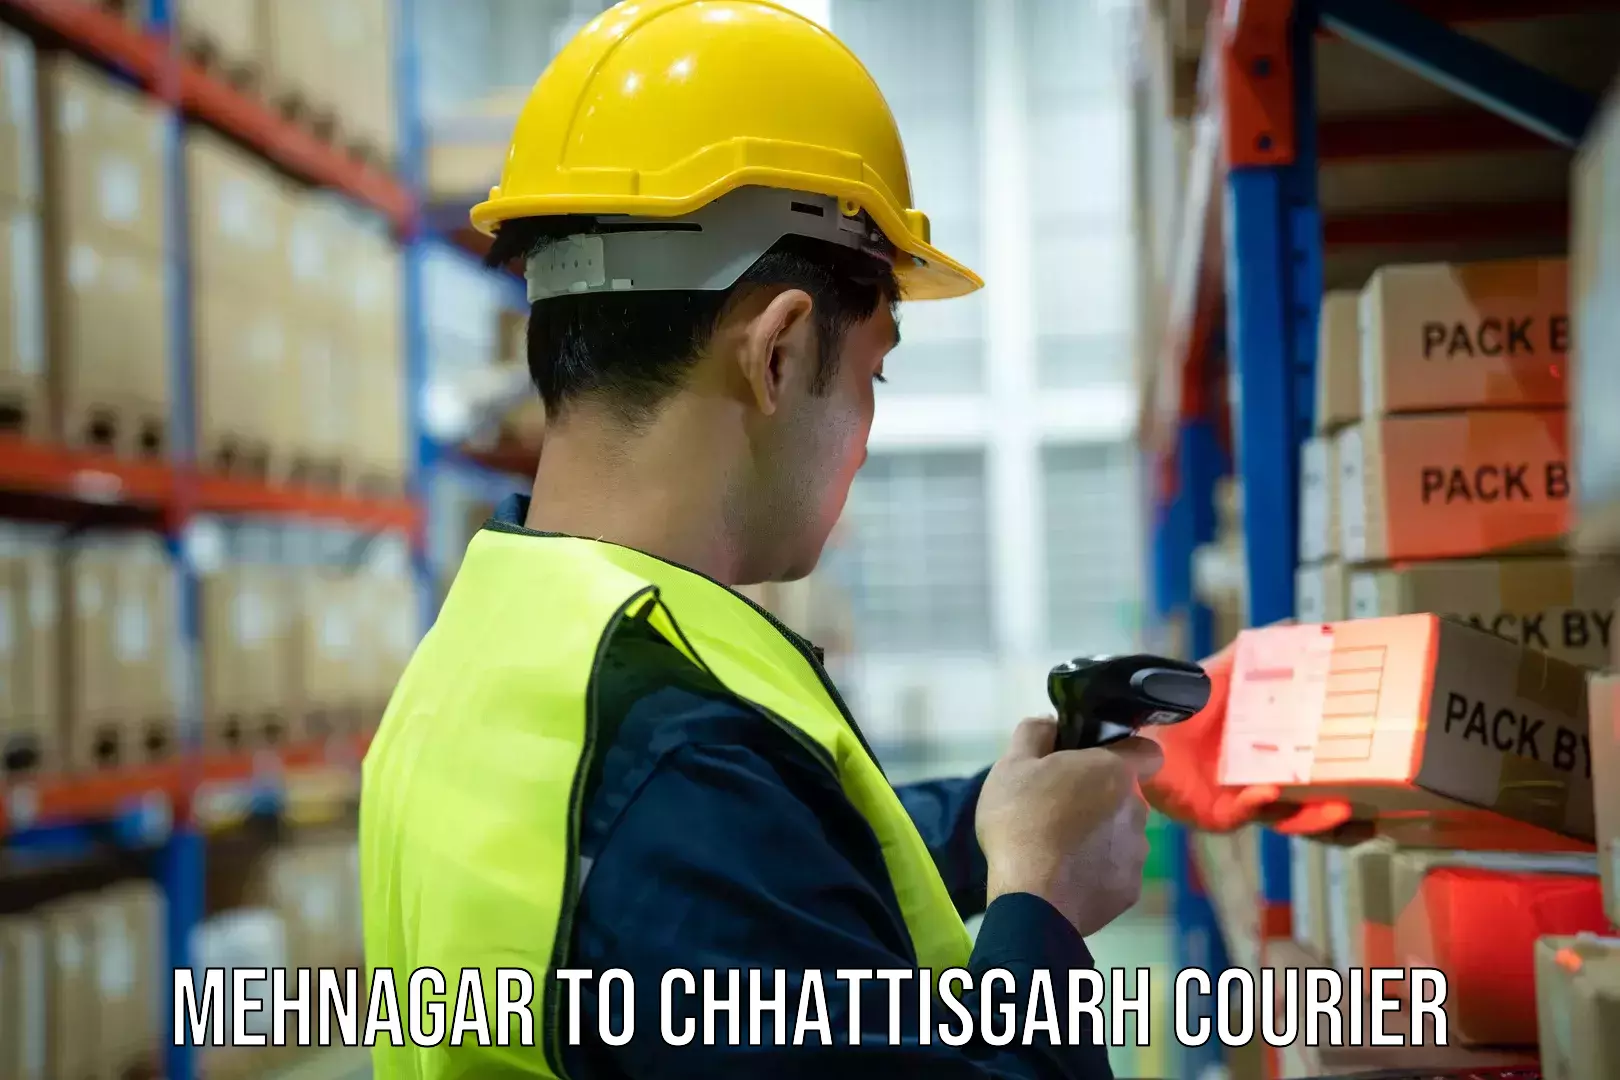 Courier service comparison Mehnagar to Charama